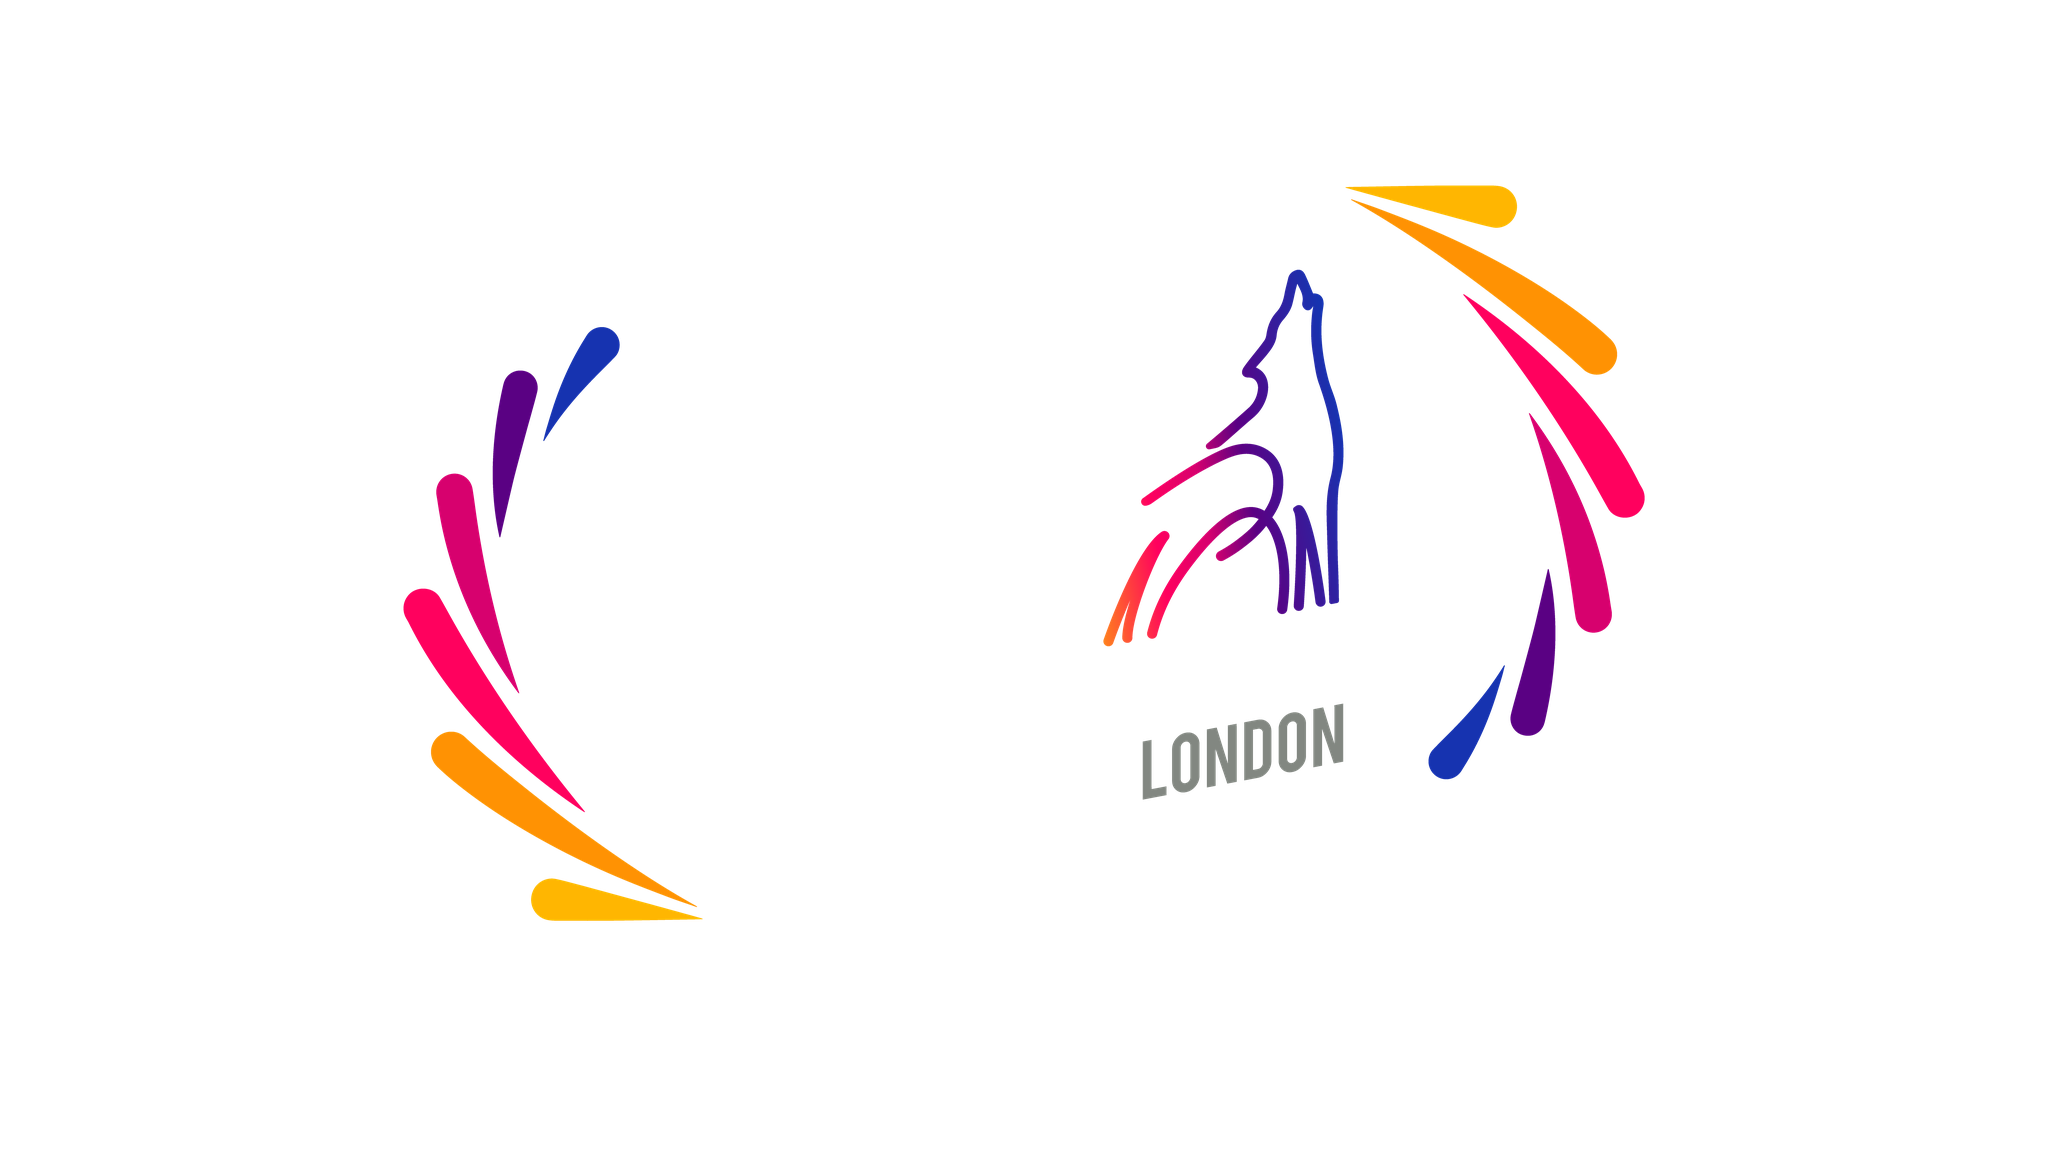 Lonely Wolf 2022 International Film Festival London - Semi-Finalist (Colour-White Text)